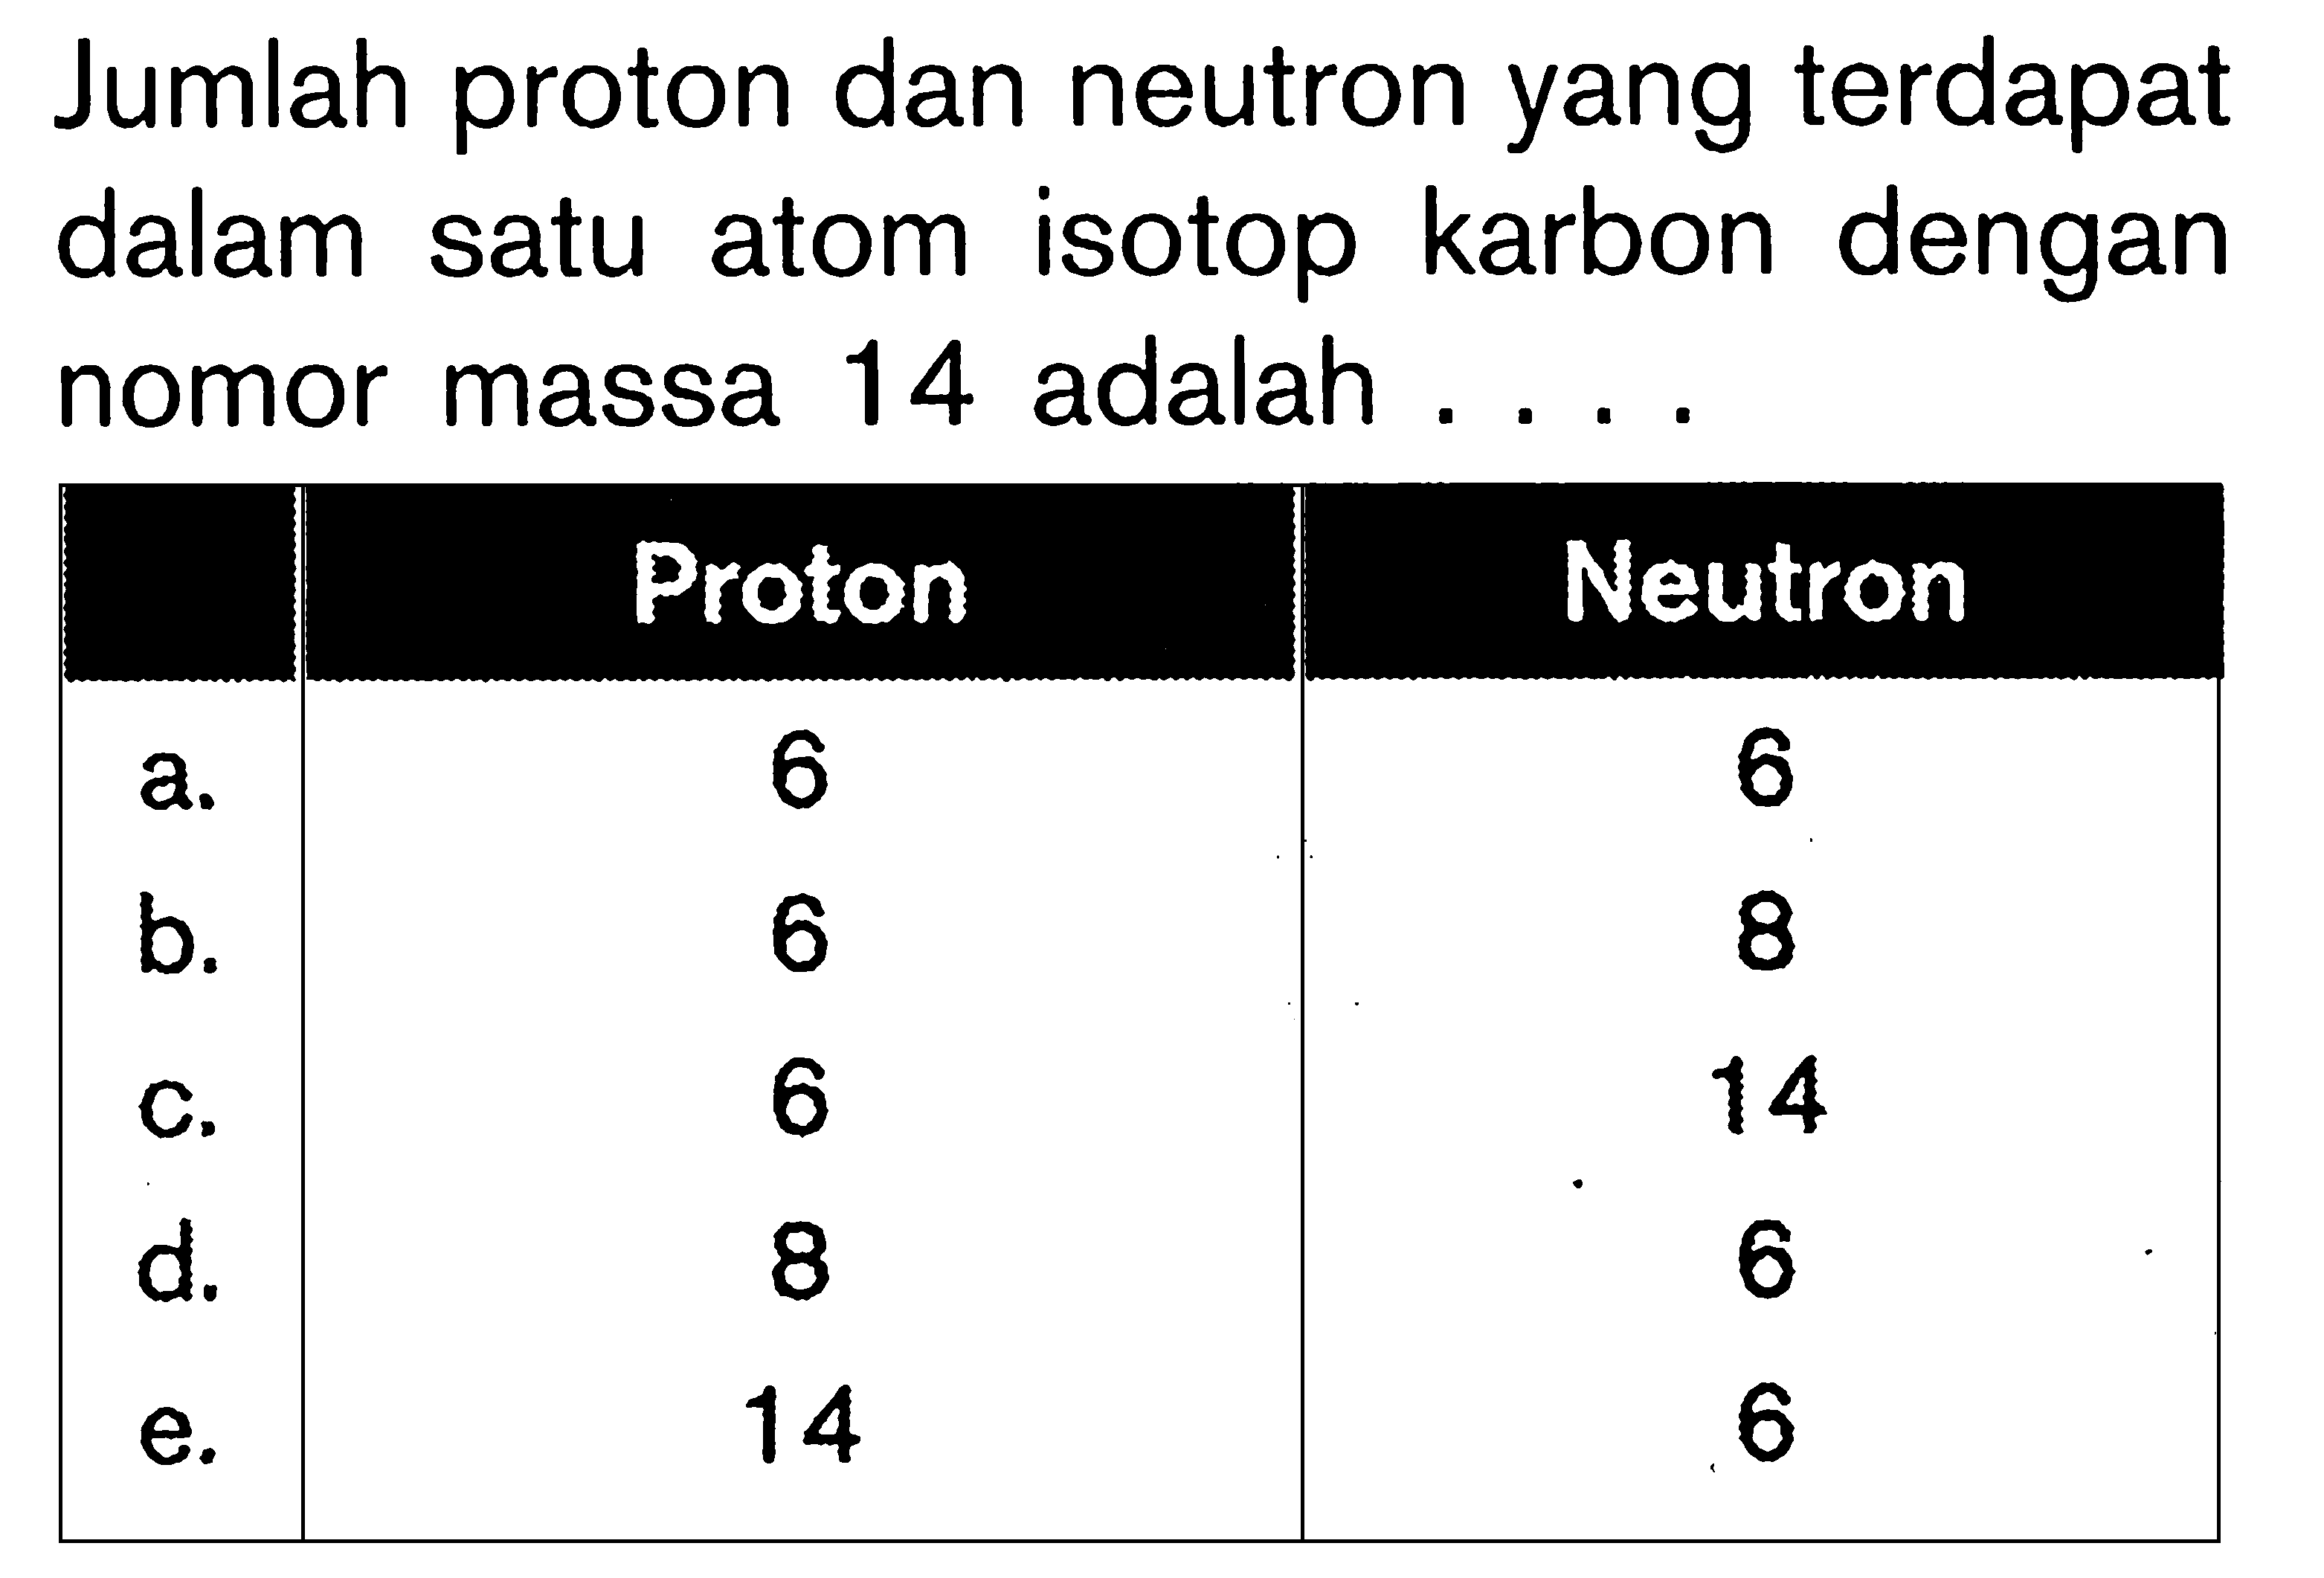 Jumlah proton dan neutron yang terdapat dalam satu atom isotop karbon dengan nomor massa 14 adalah ....